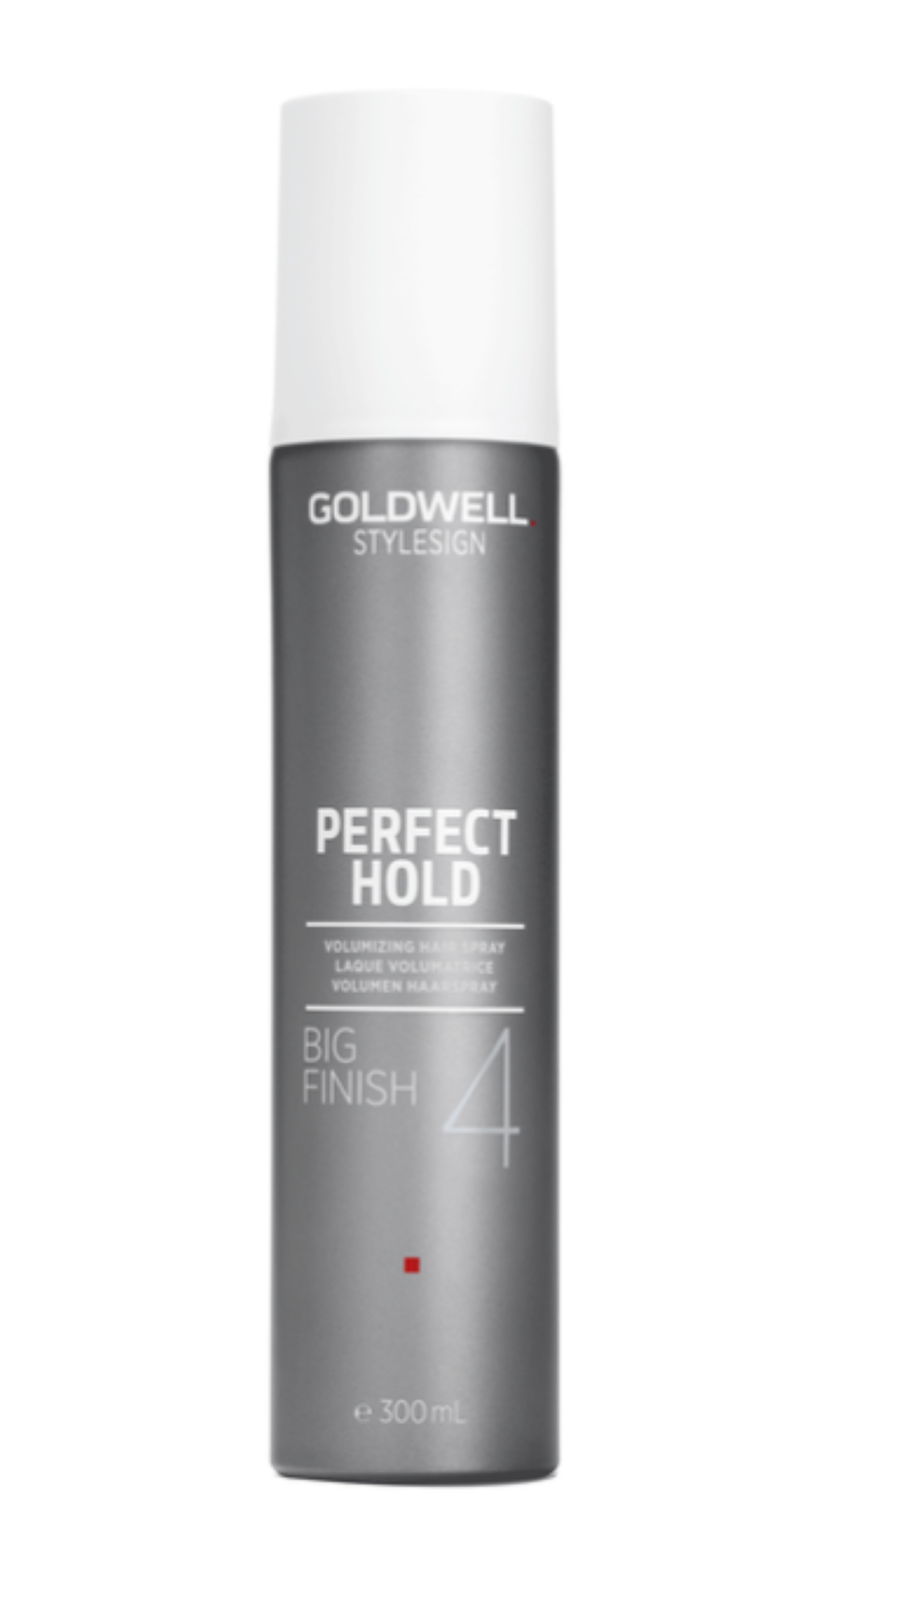 Goldwell Big Finish Hairspray, 10.1 ounces - $22.50